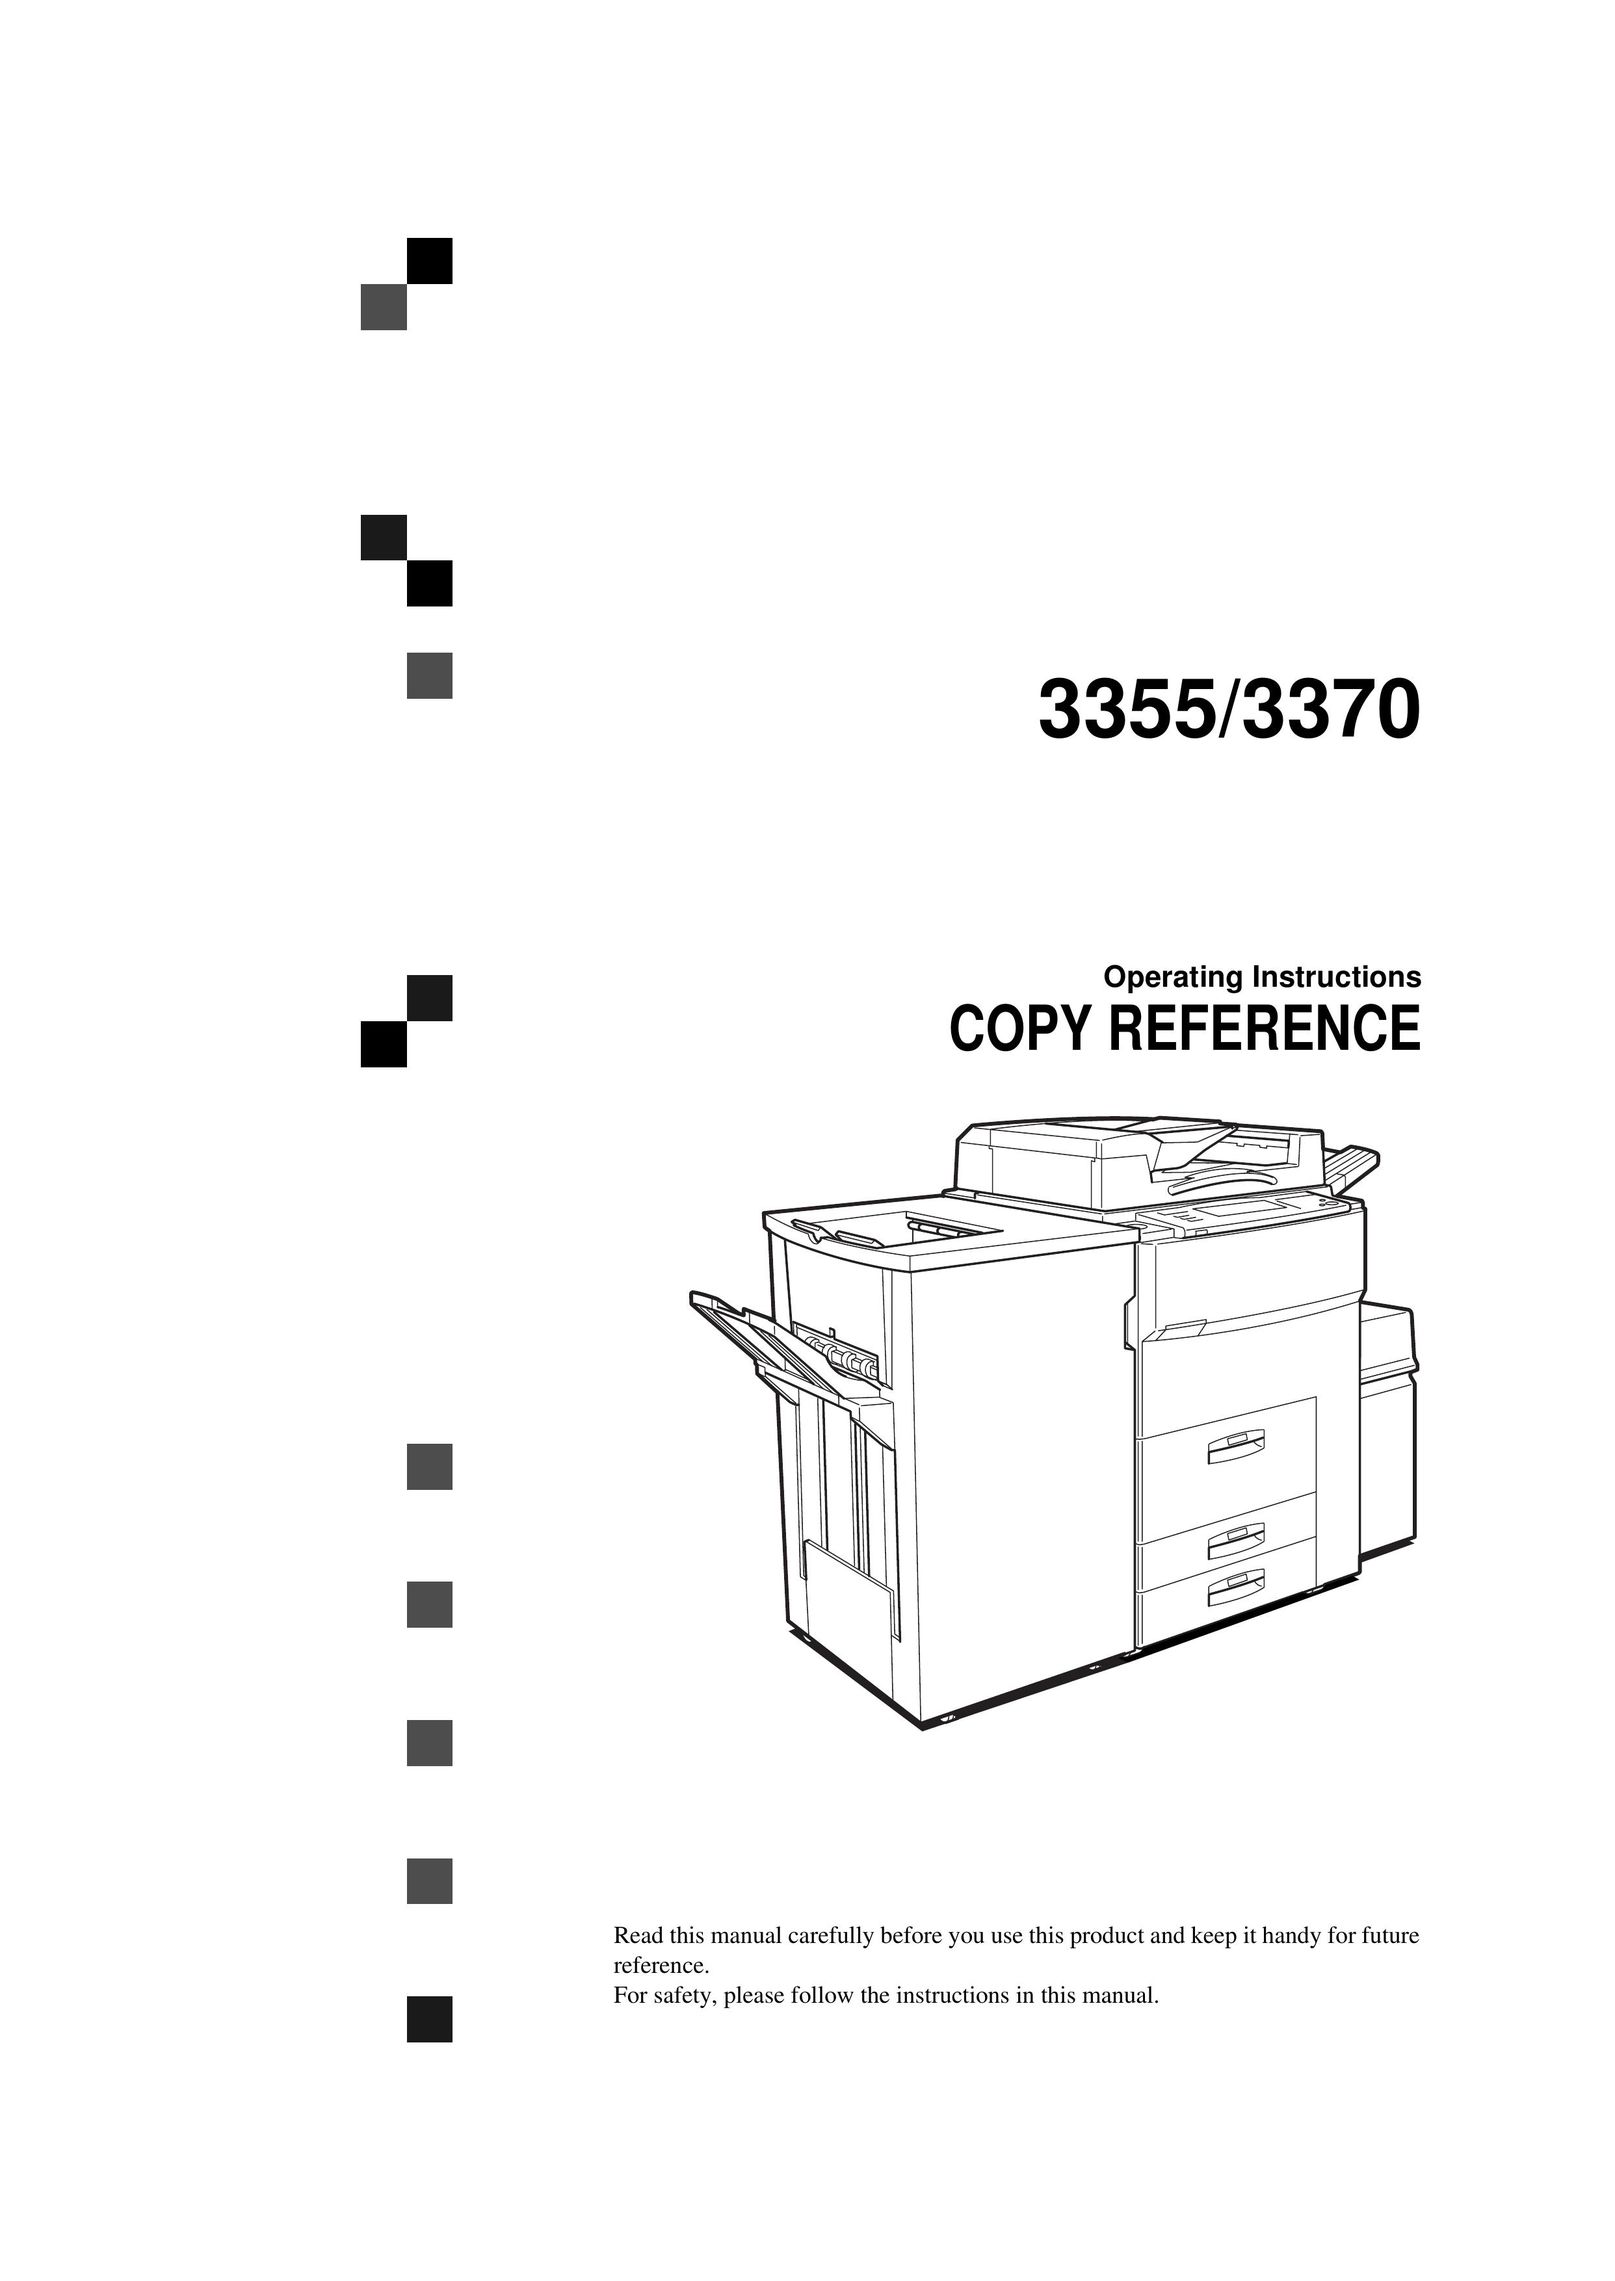 Savin 3370 All in One Printer User Manual